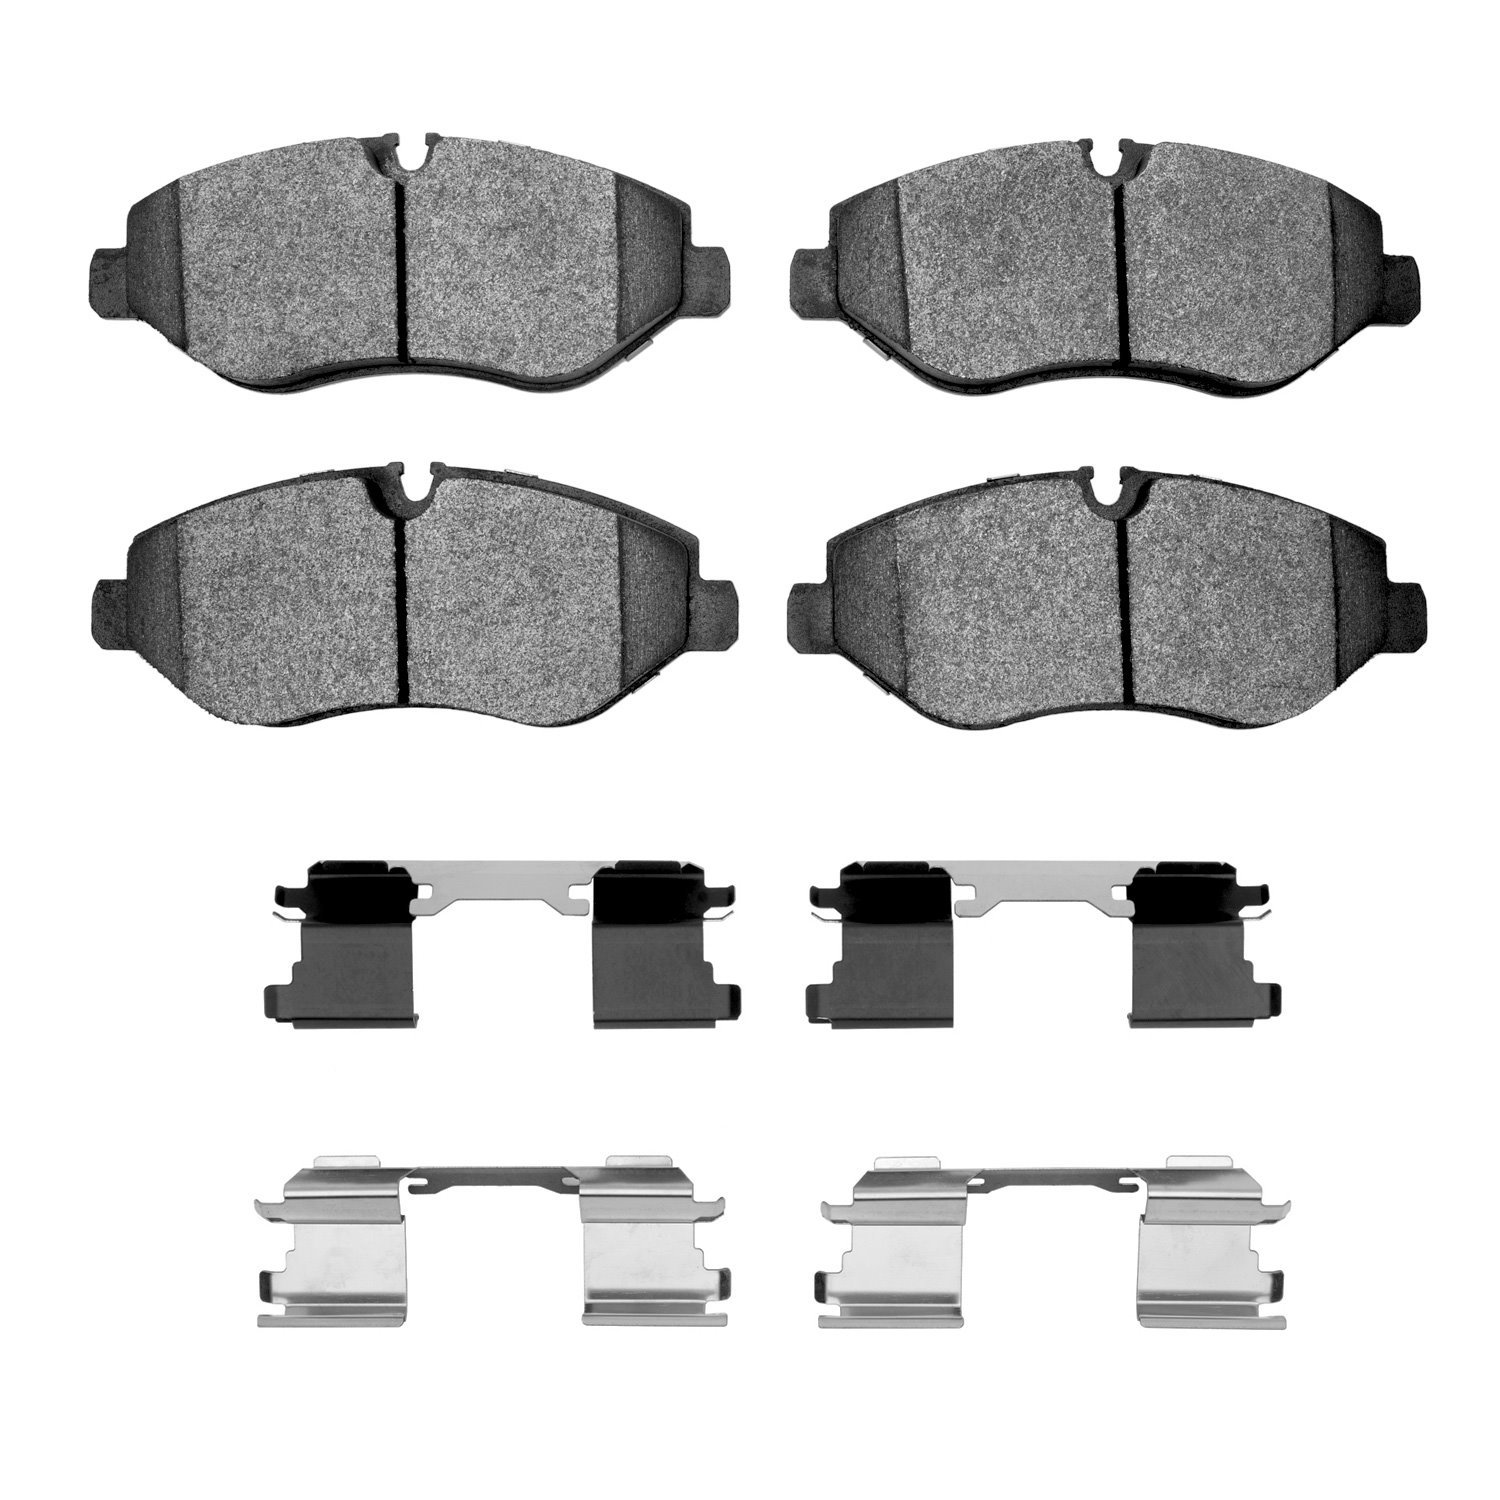 Super-Duty Brake Pads & Hardware Kit, Fits Select Fits Multiple Makes/Models, Position: Front